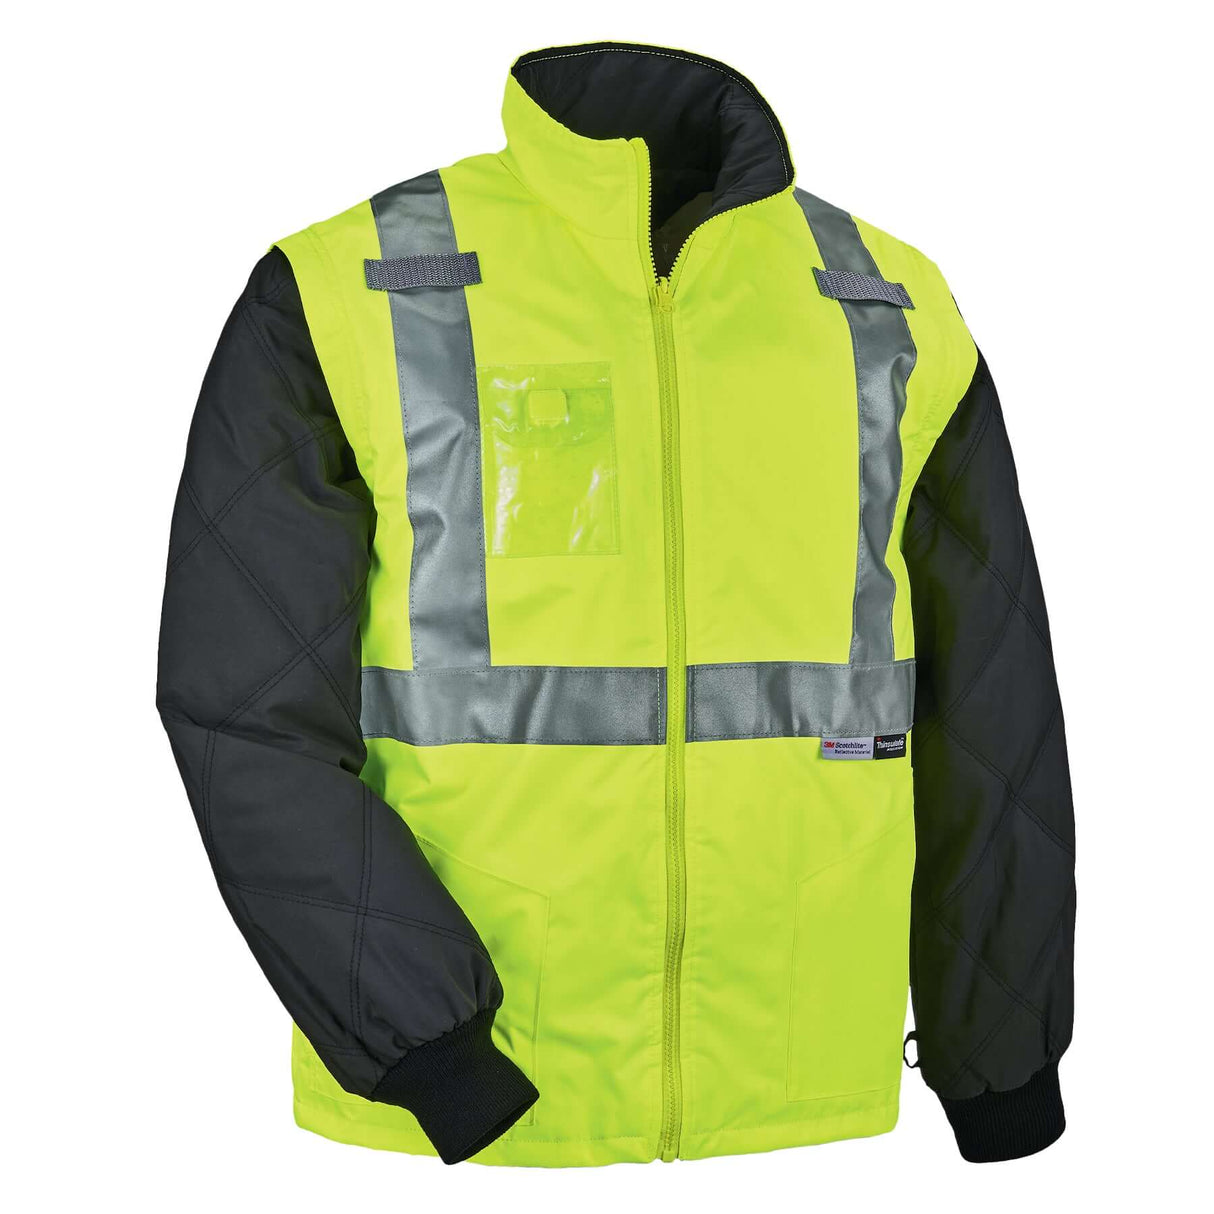 Ergodyne GloWear 8287 Hi-Viz  Winter Jacket and Vest